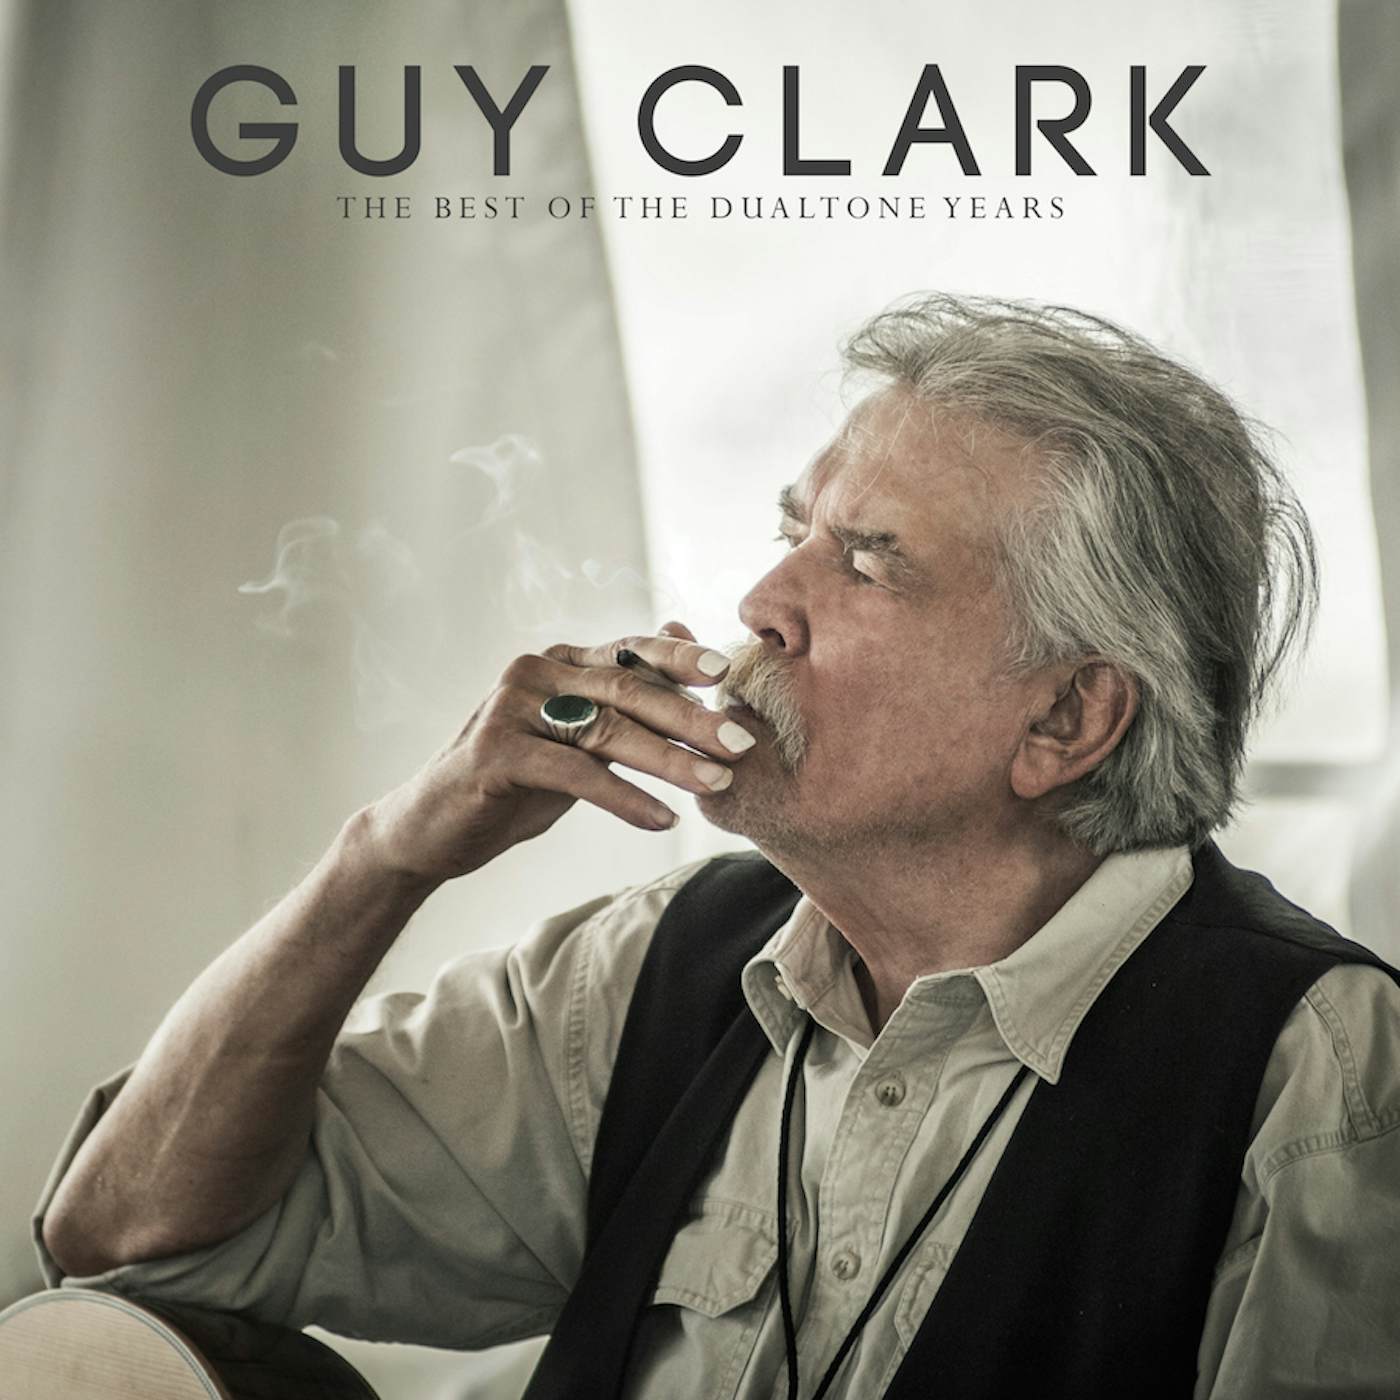 Guy Clark BEST OF THE DUALTONE YEARS Vinyl Record